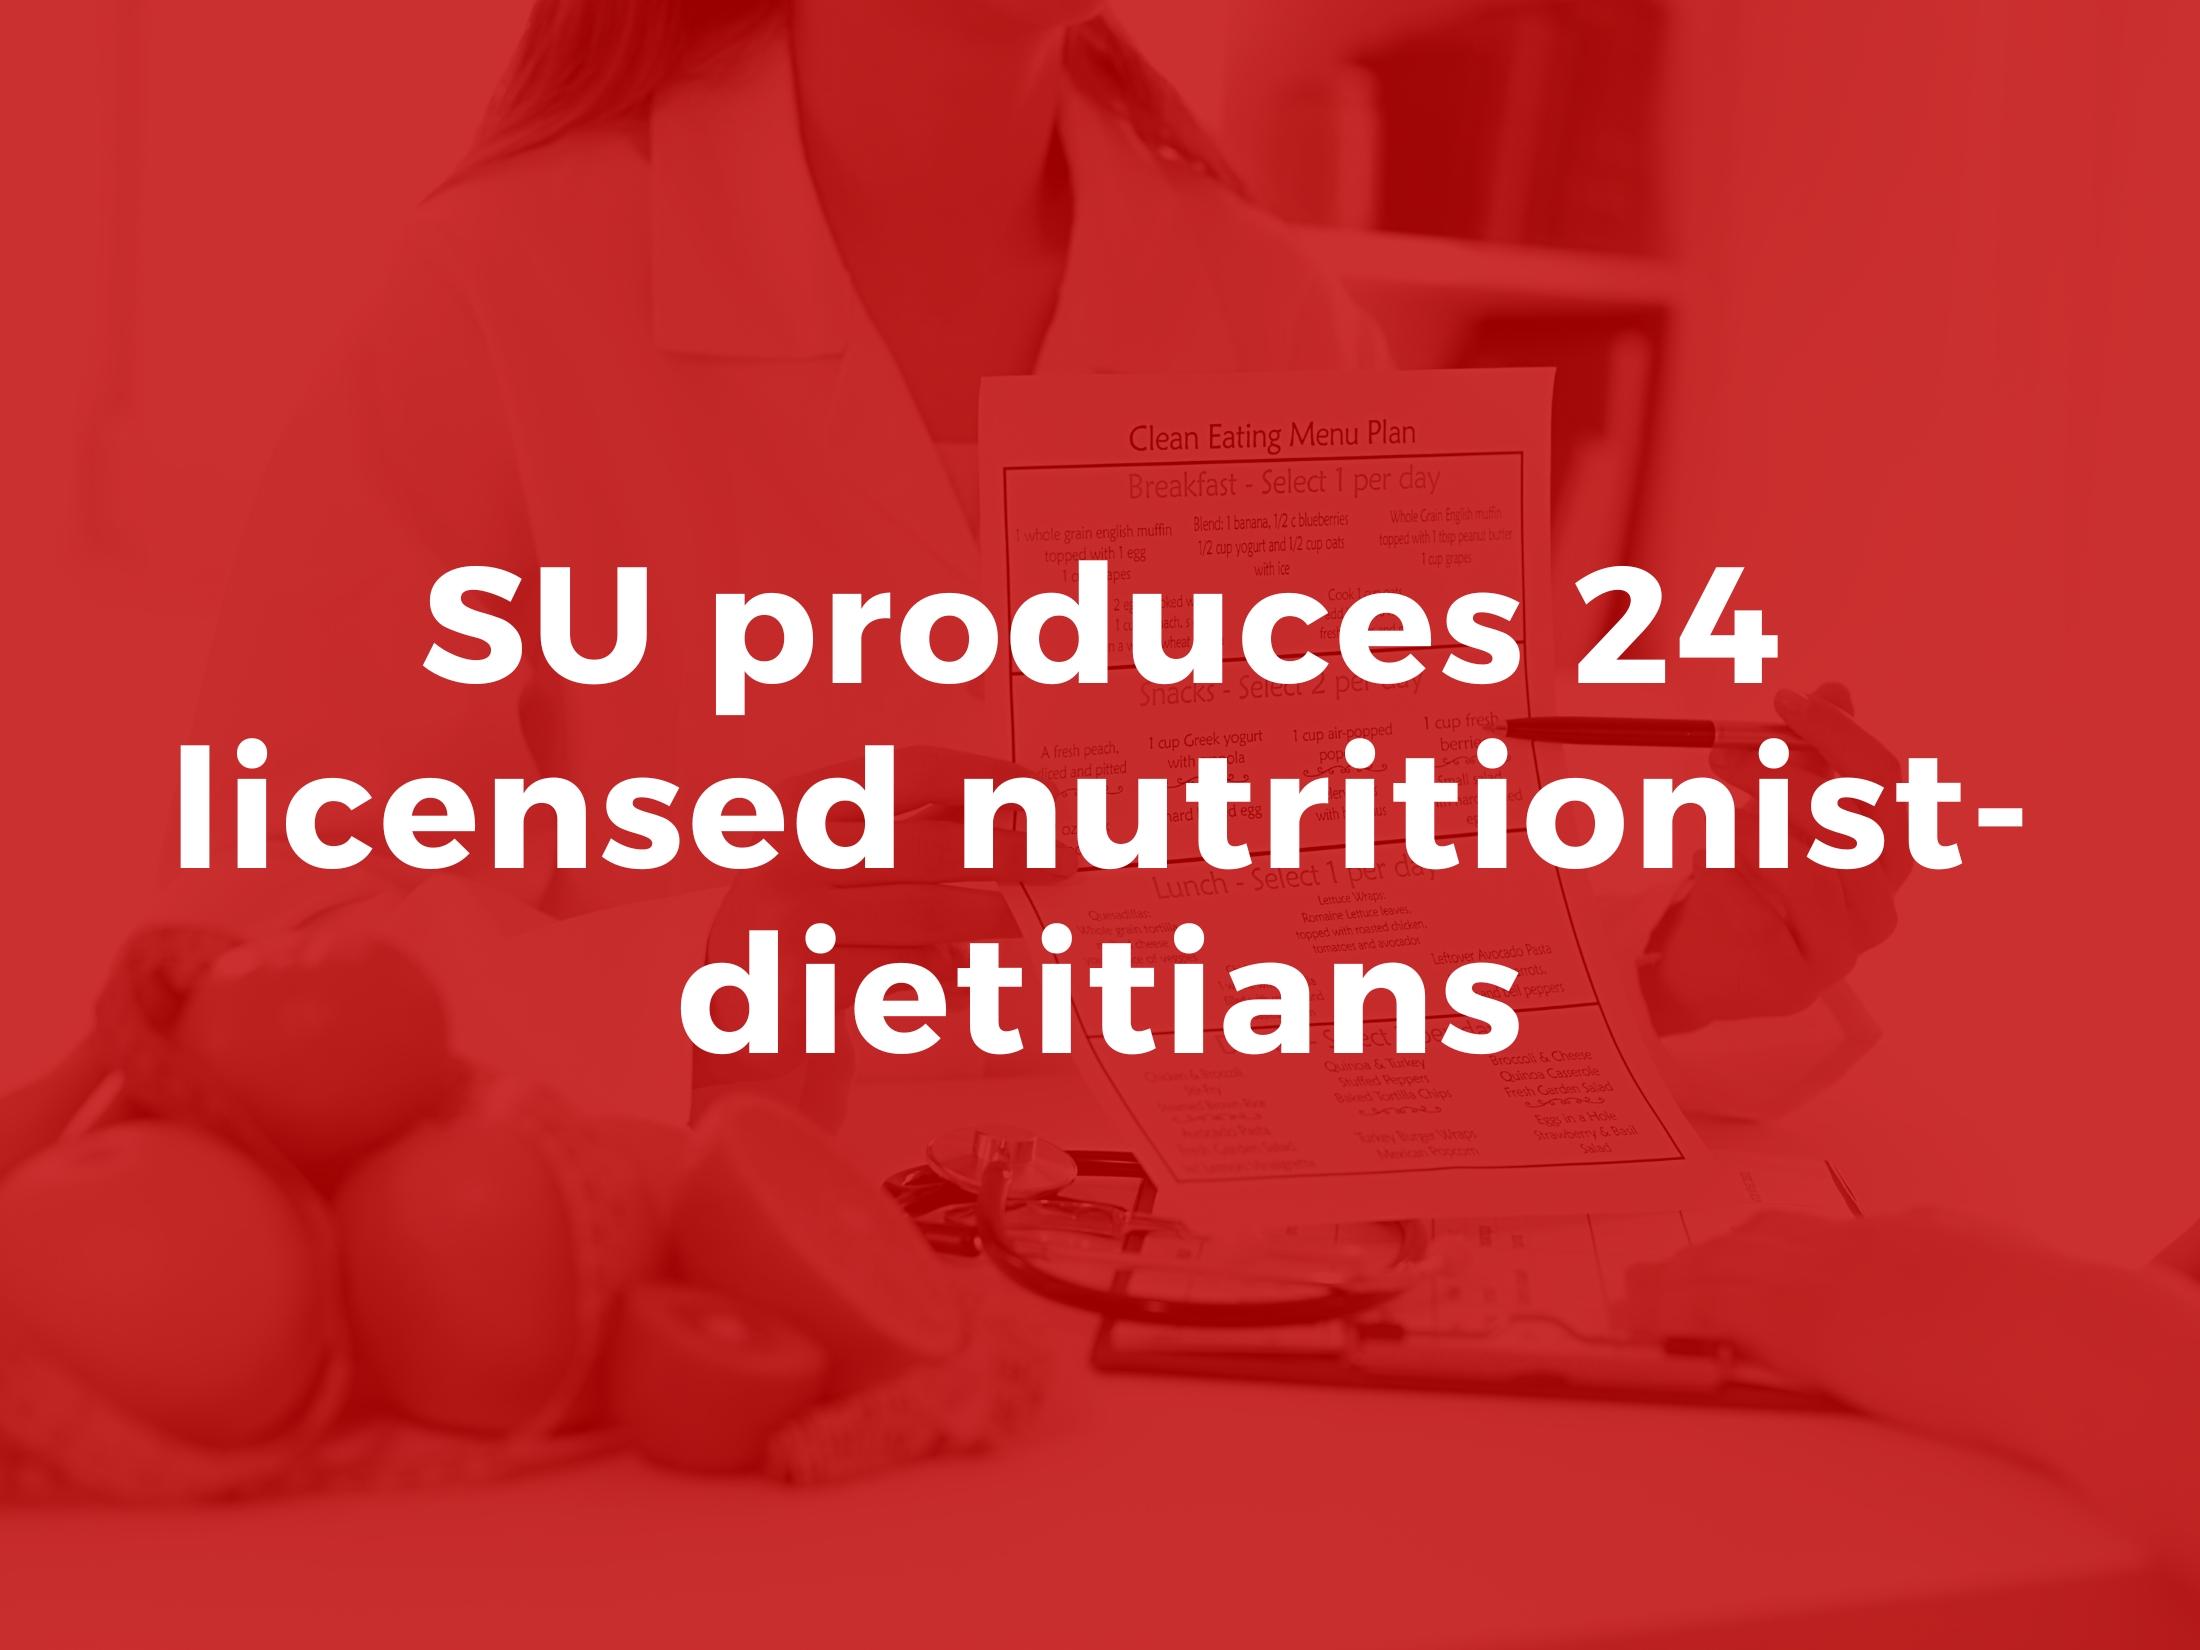 SU produces 24 licensed nutritionist-dietitians